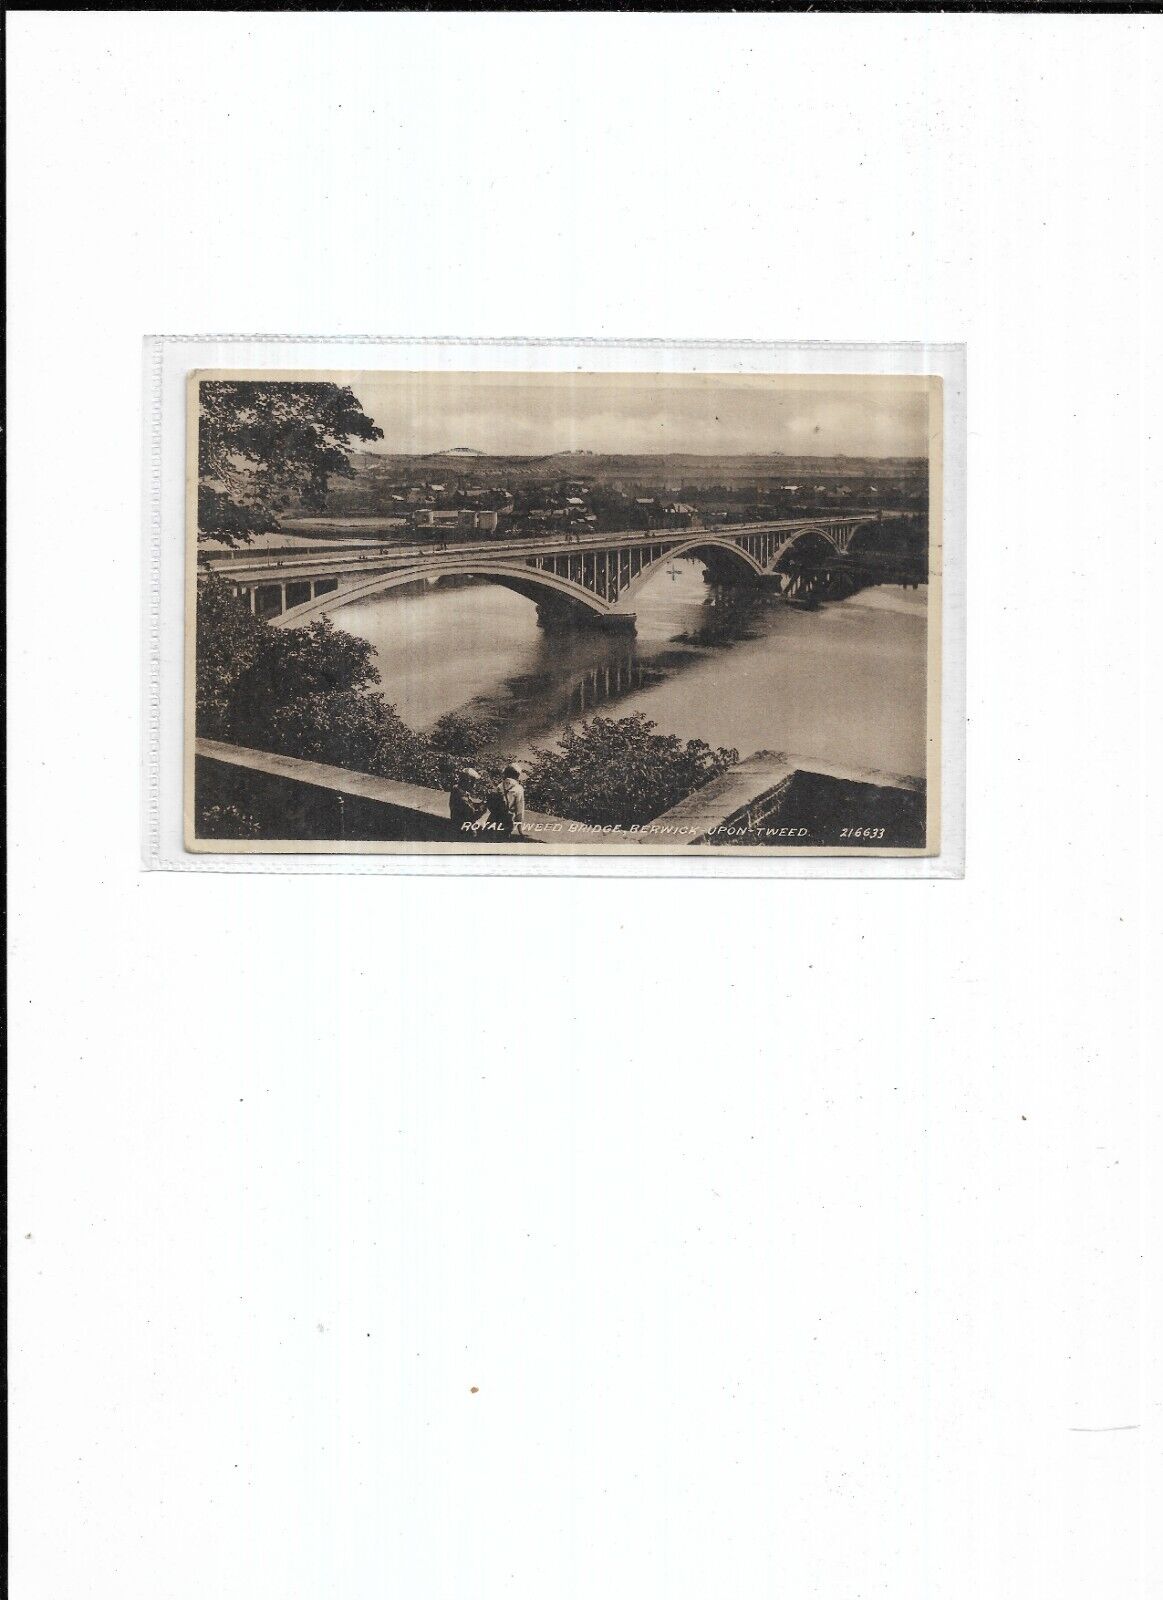 House Clearance - Northumberland Service 216633 Royal Tweed Bridge...." Postmarked 1949